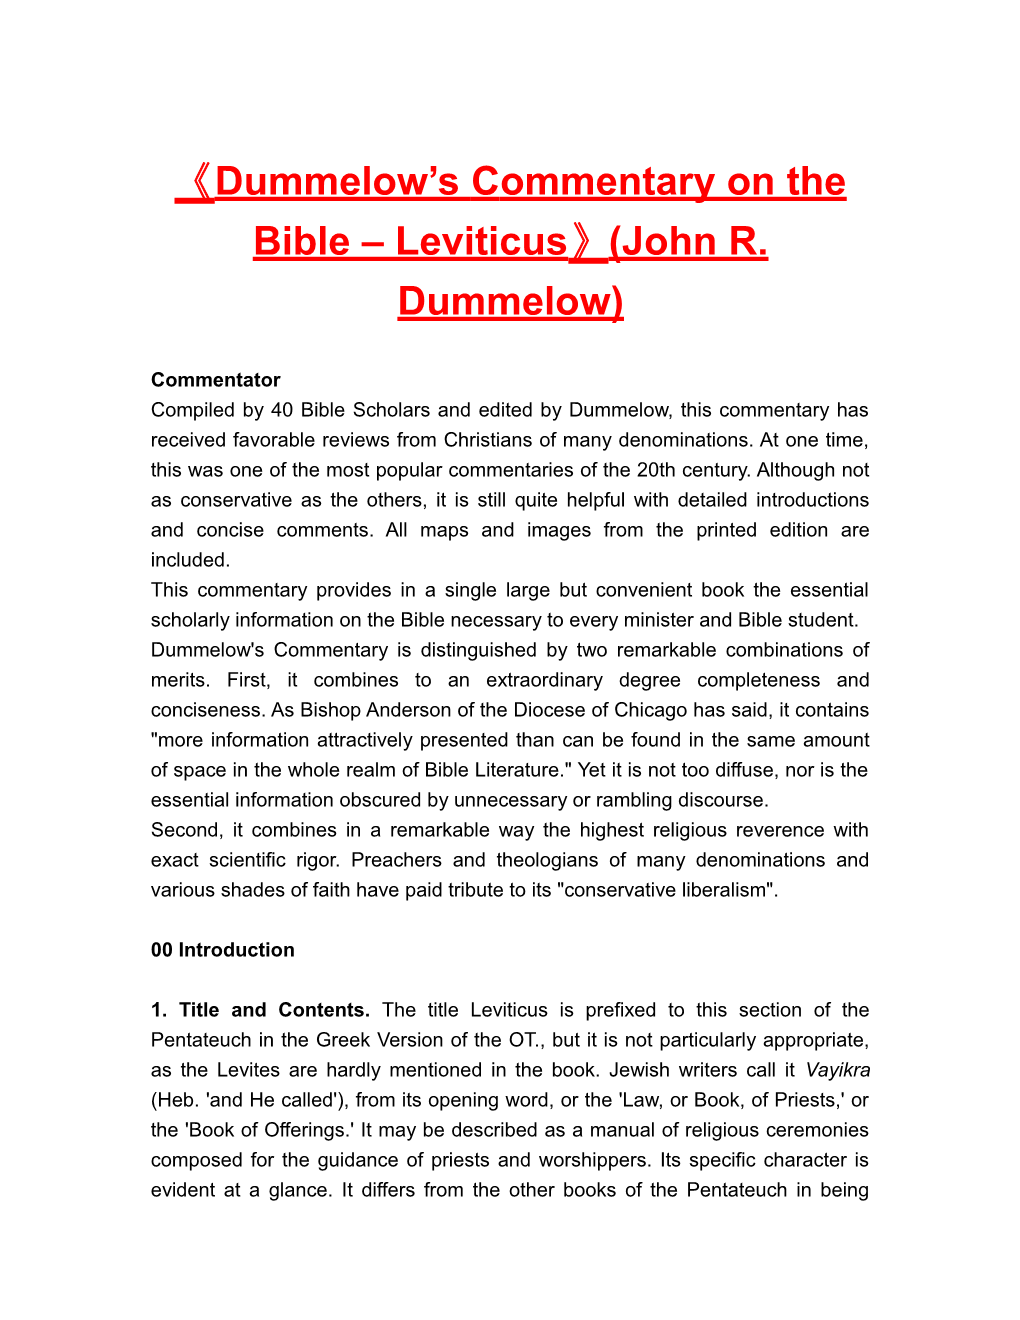 Dummelow Scommentaryon the Bible Leviticus (John R. Dummelow)